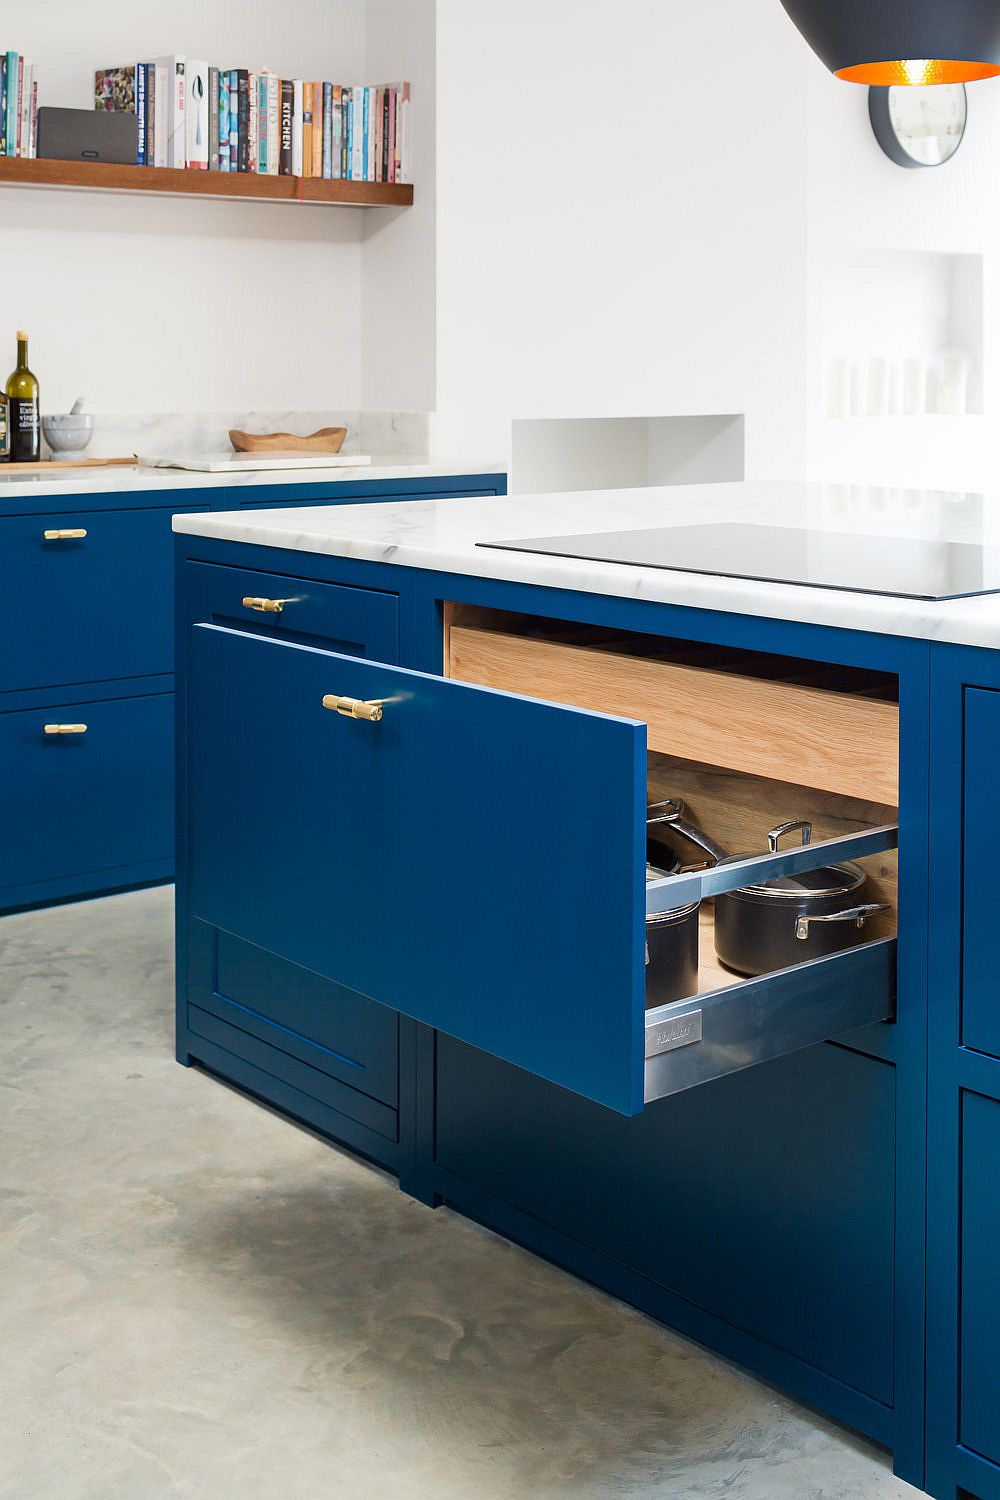 Oak internals and drawer inserts bring smart storage to the deep blue kitchen island